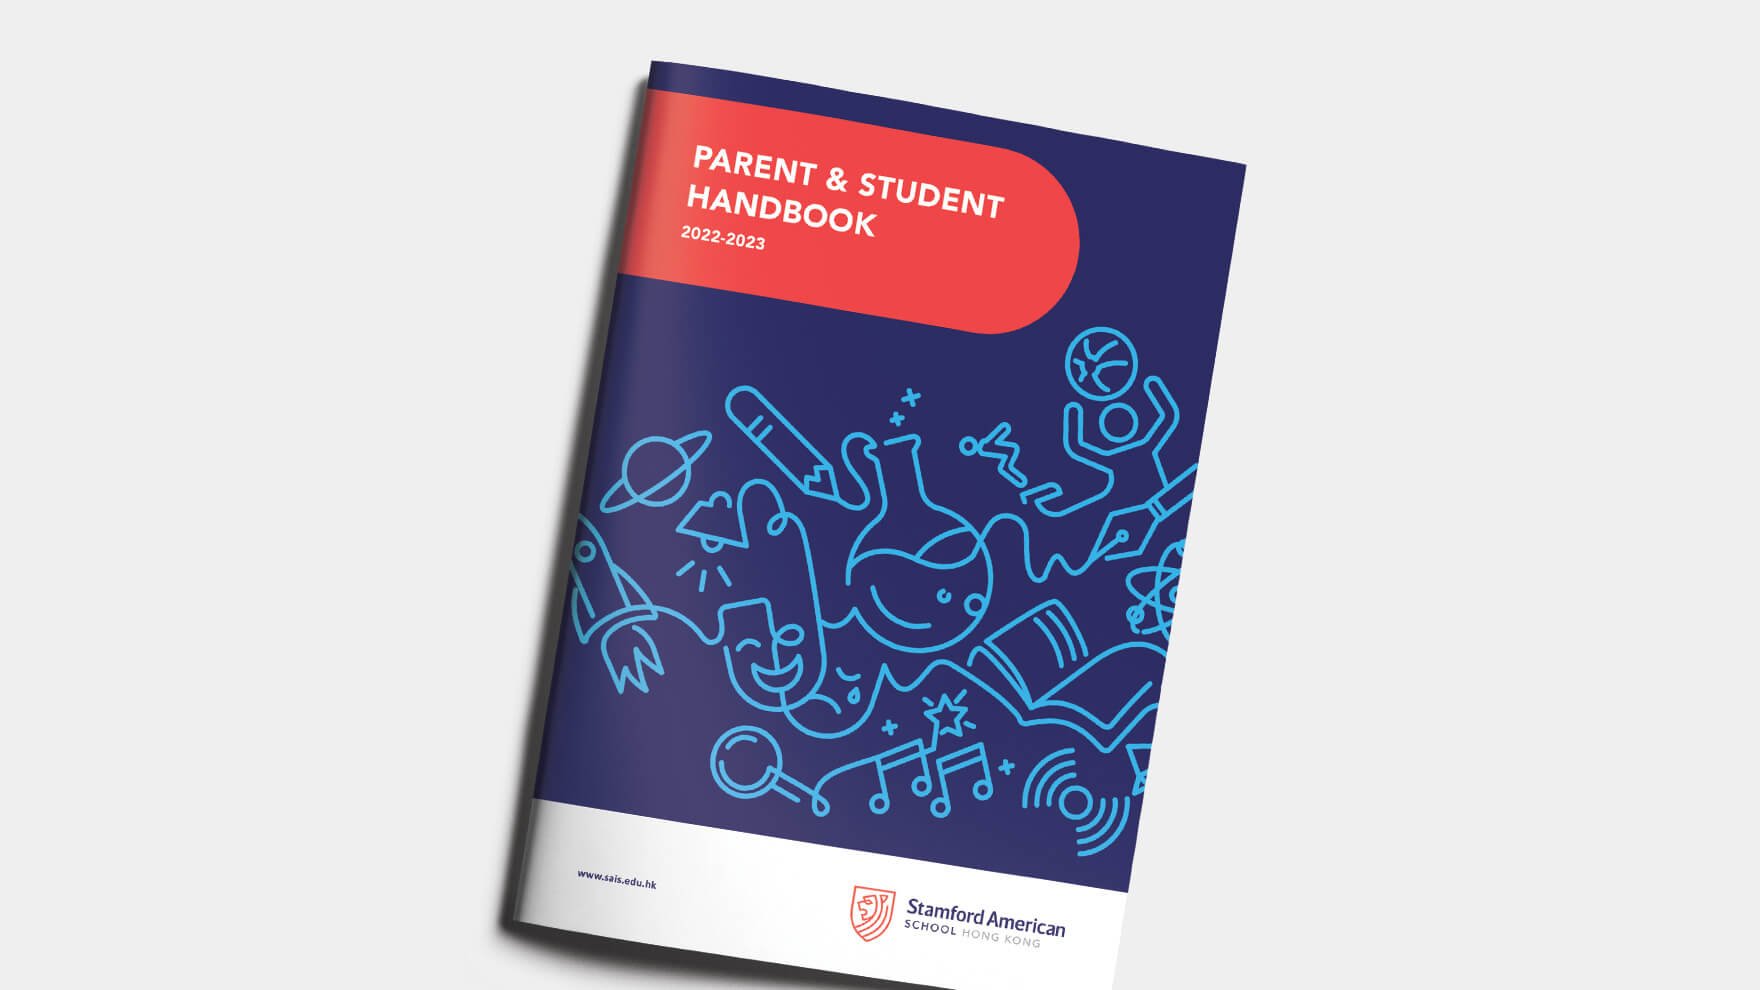 Branding Agency Hong Kong_Parent and Student Handbook Design 2022-23_SAIS-1_CheddarMedia_1760